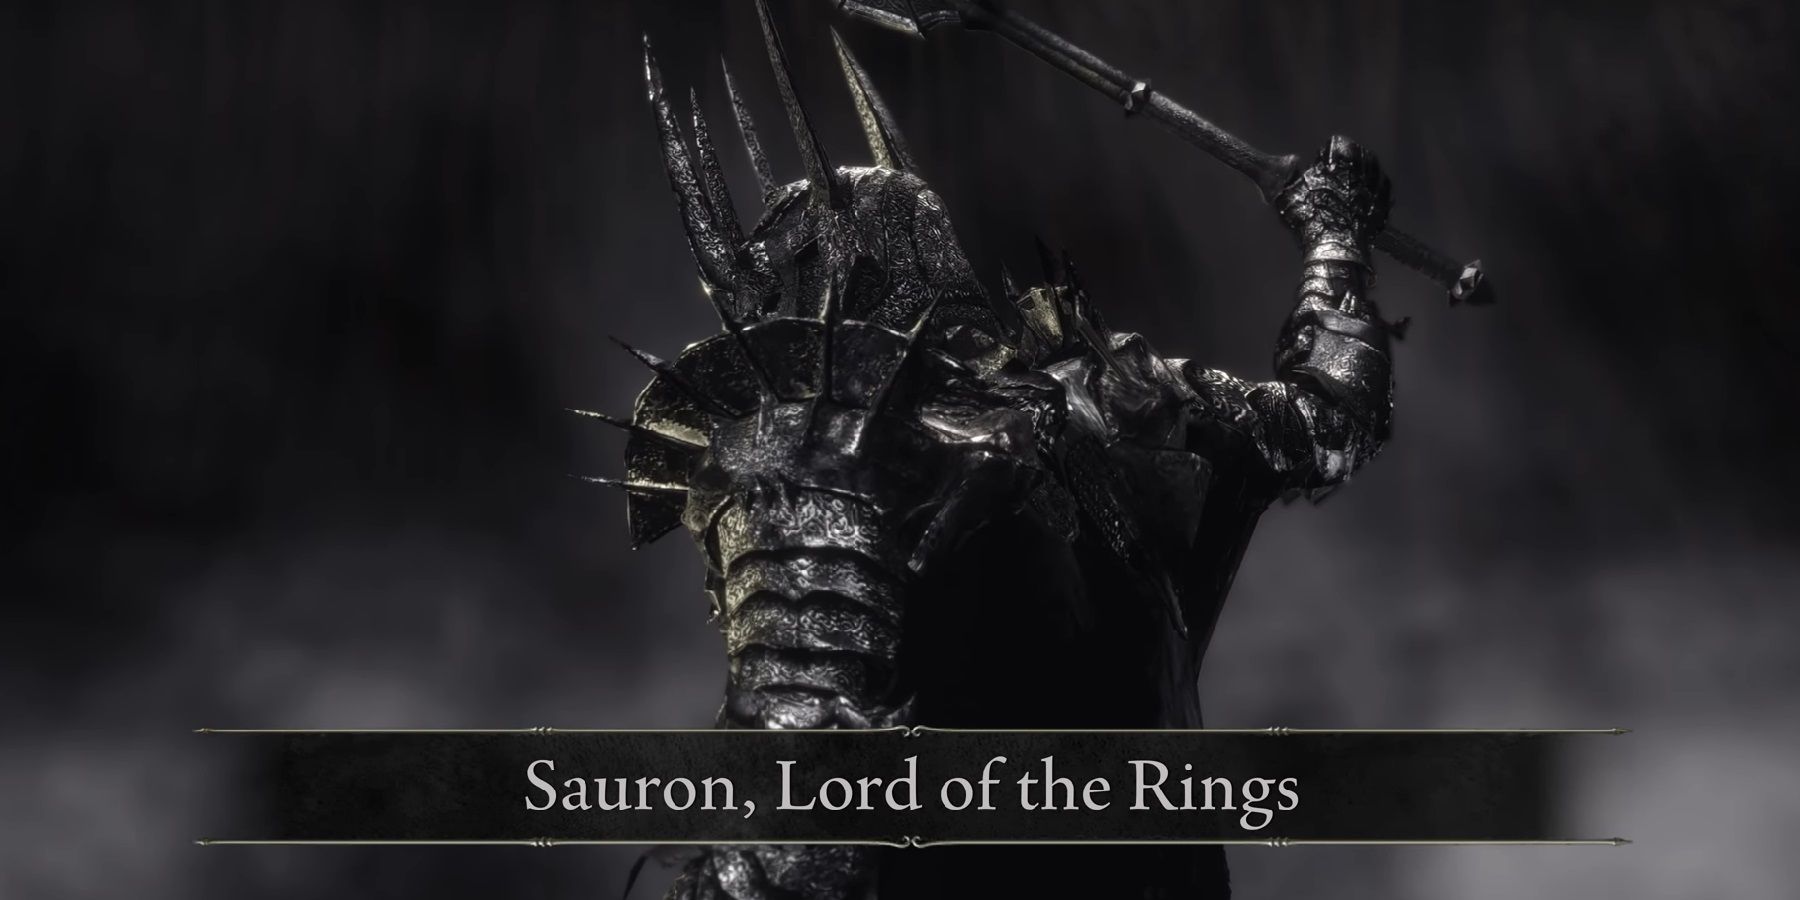 Sauron is Op #eldenring #eldenringedit #sauron #thelordoftherings #fat